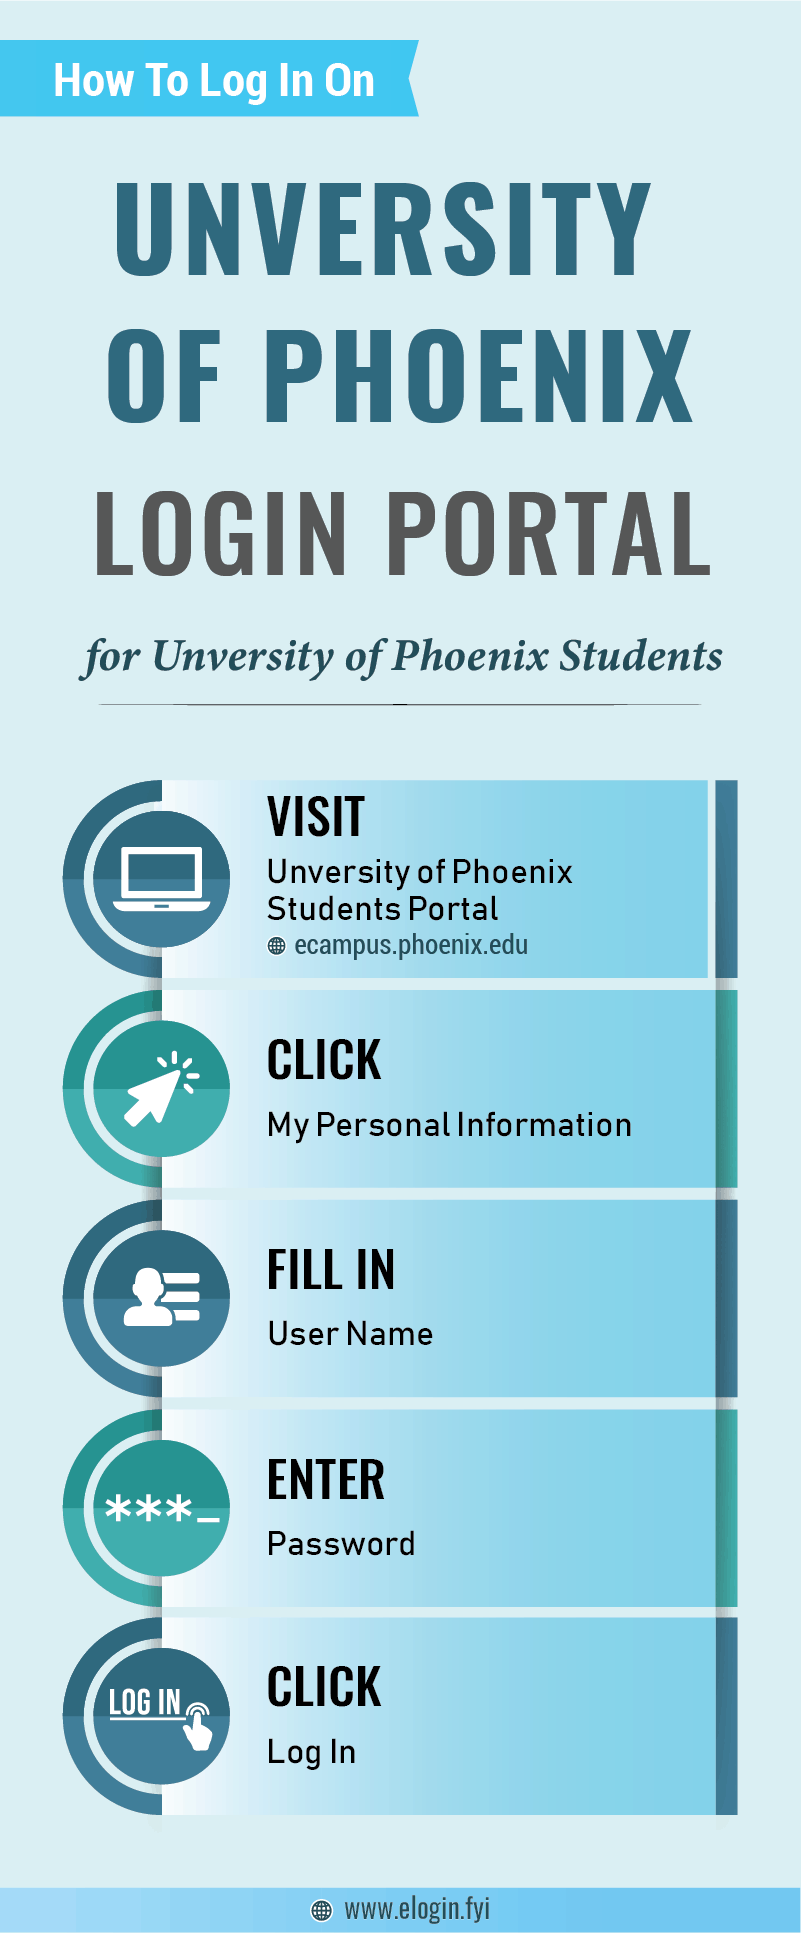 university of phoenix ecampus qatar